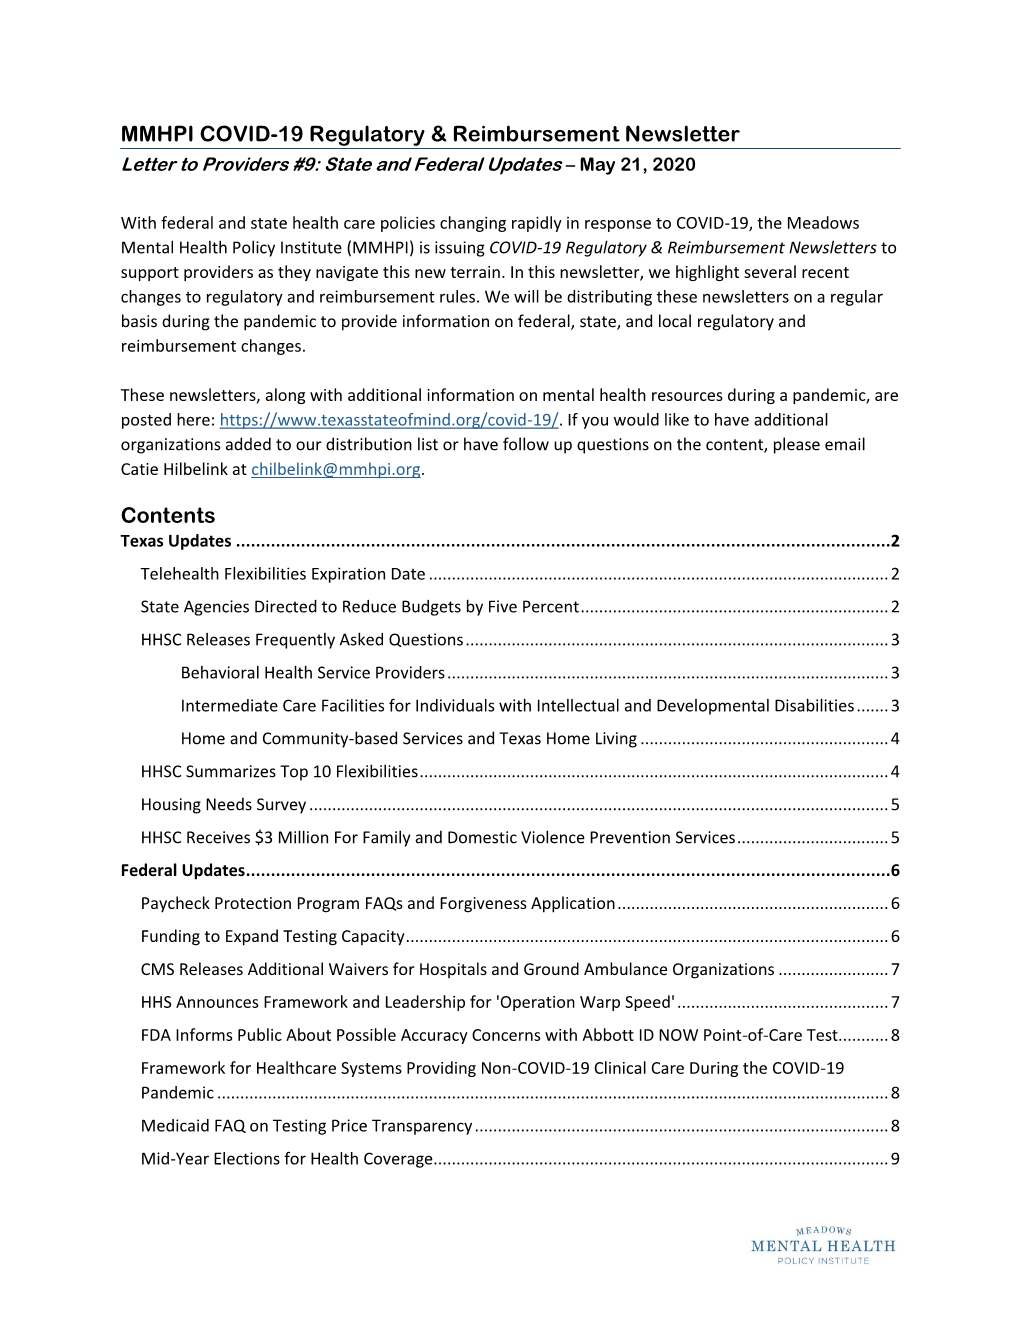 MMHPI COVID-19 Regulatory & Reimbursement Newsletter Contents